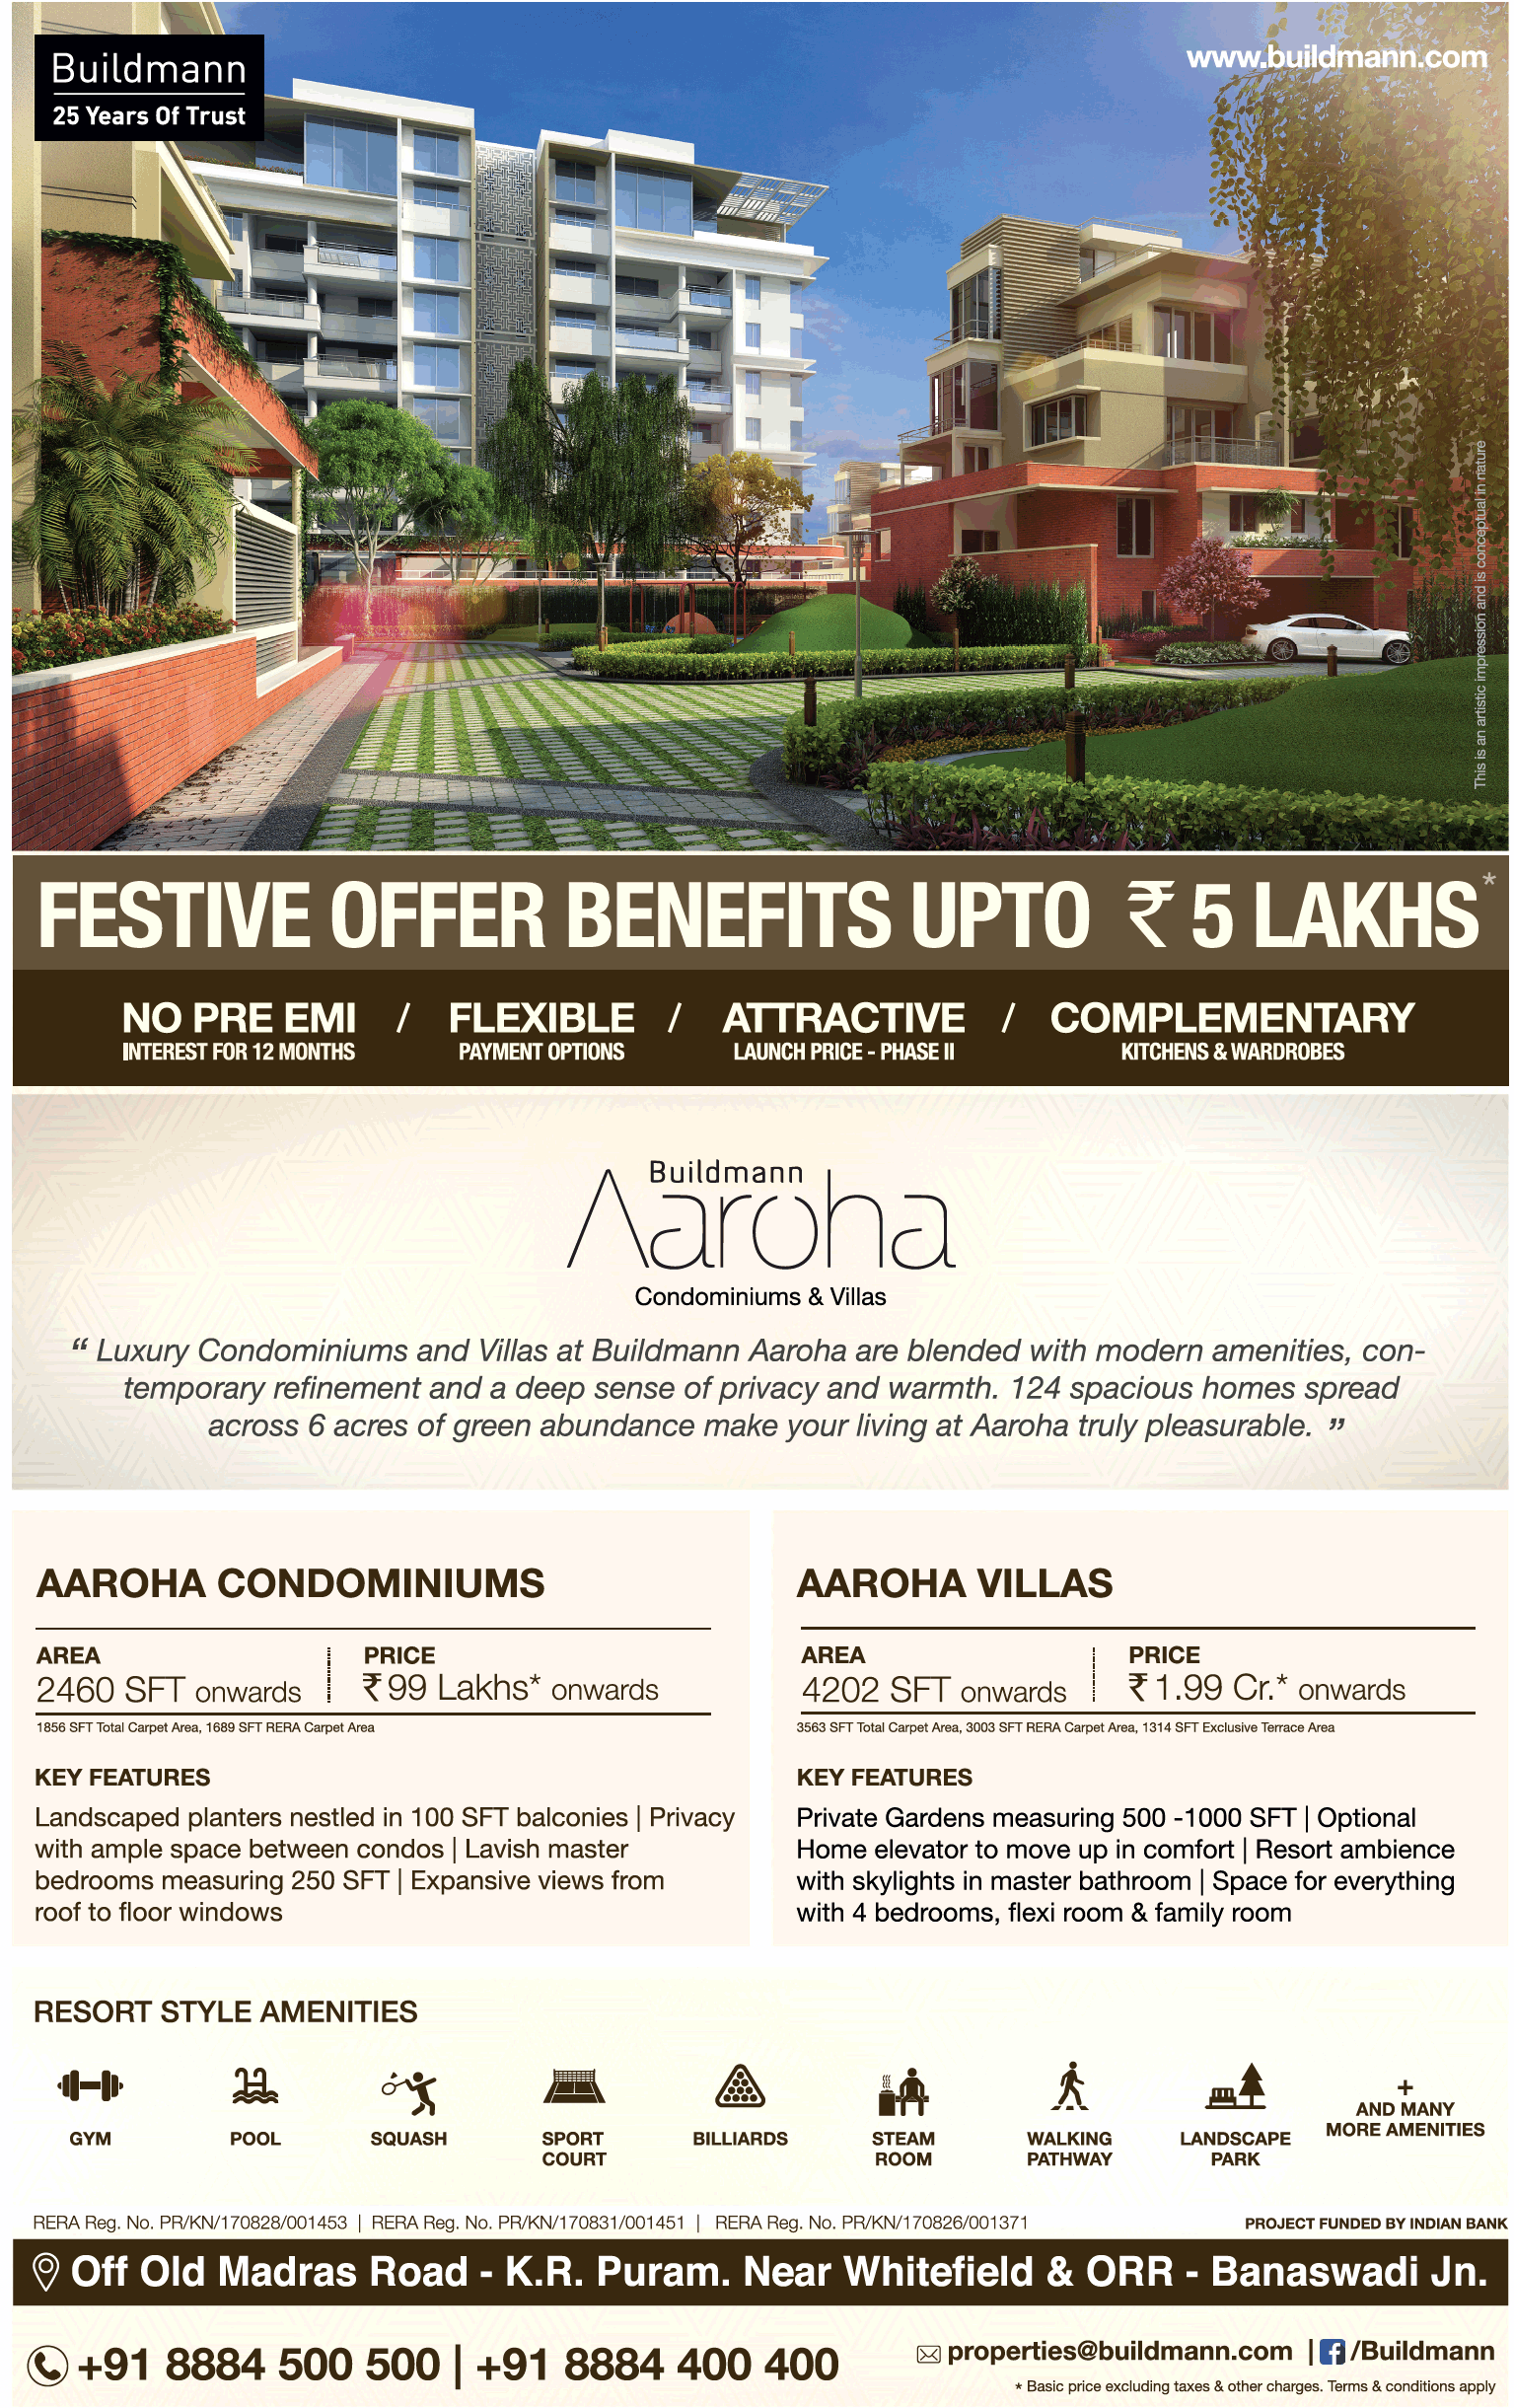 Buildmann Aaroha Festive Offers Benefits Upto 5Lakhs Ad - Advert Gallery